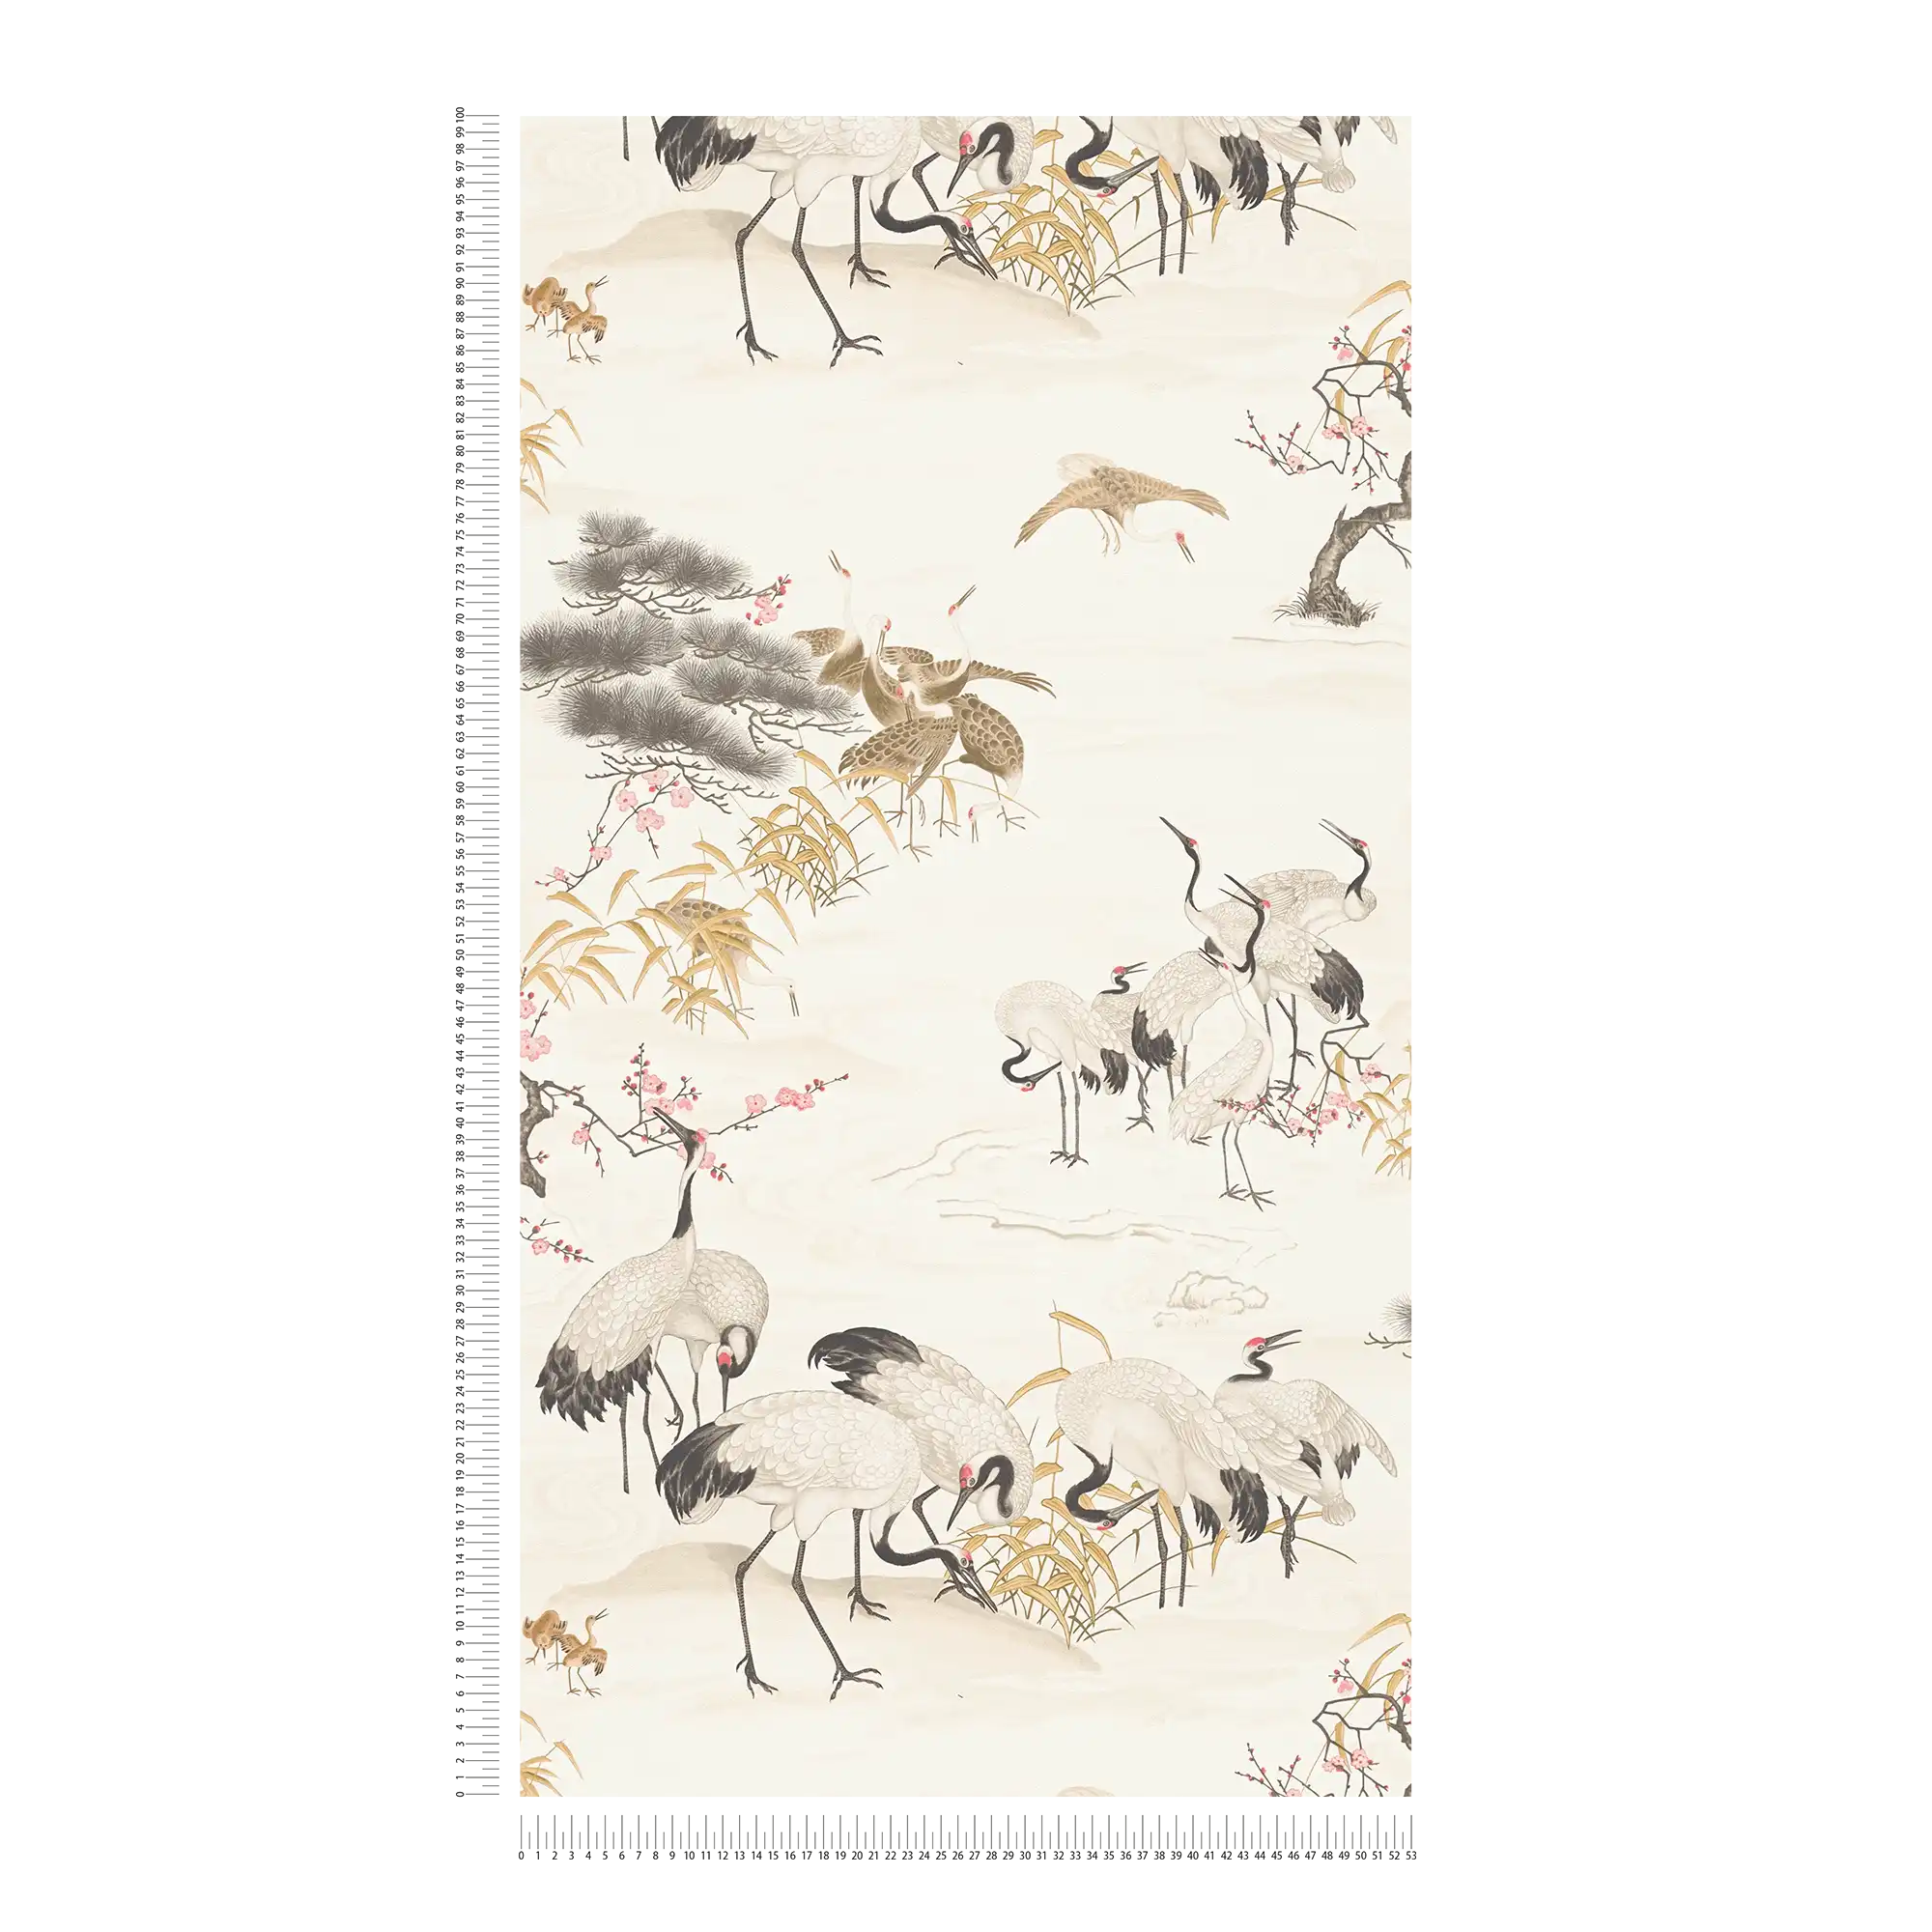             Crane wallpaper Asian style with animal pattern - cream
        